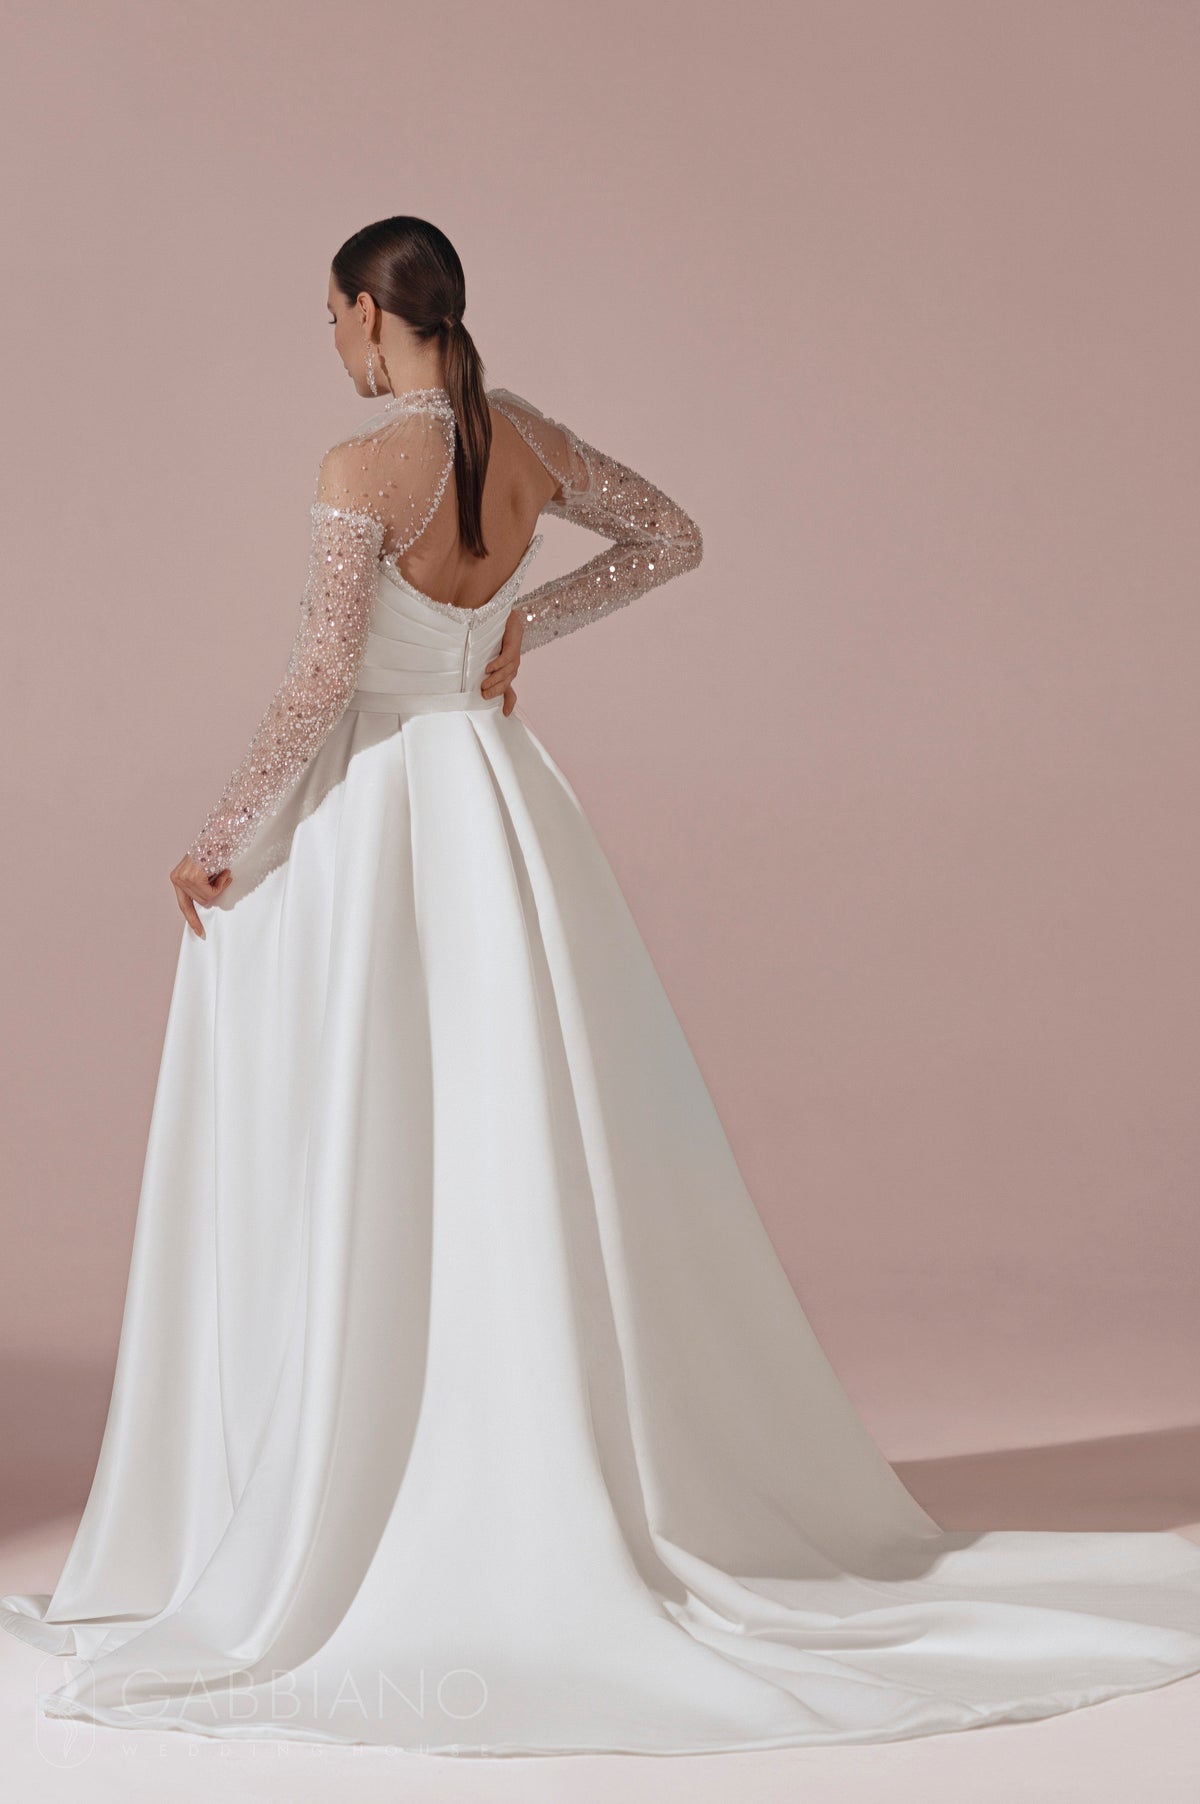 Unique Design Detachable Sleeves and Collar Strapless Wedding Dress Bridal Gown Side Slit Pleated Design Detachable Train Sequin Dress